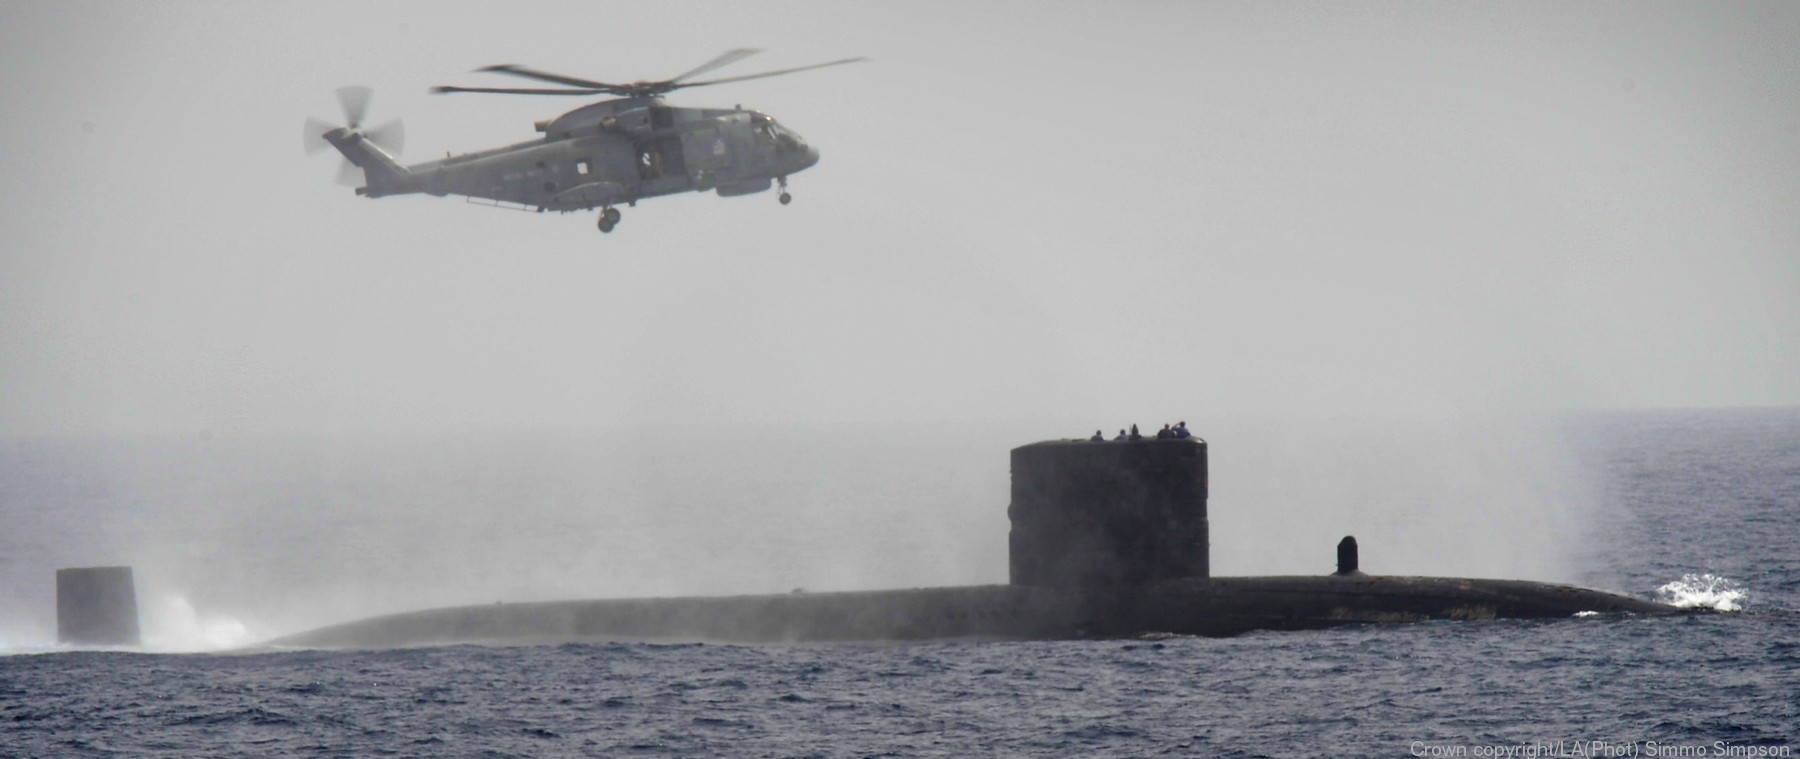 hms turbulent s-87 trafalgar class attack submarine royal navy 05